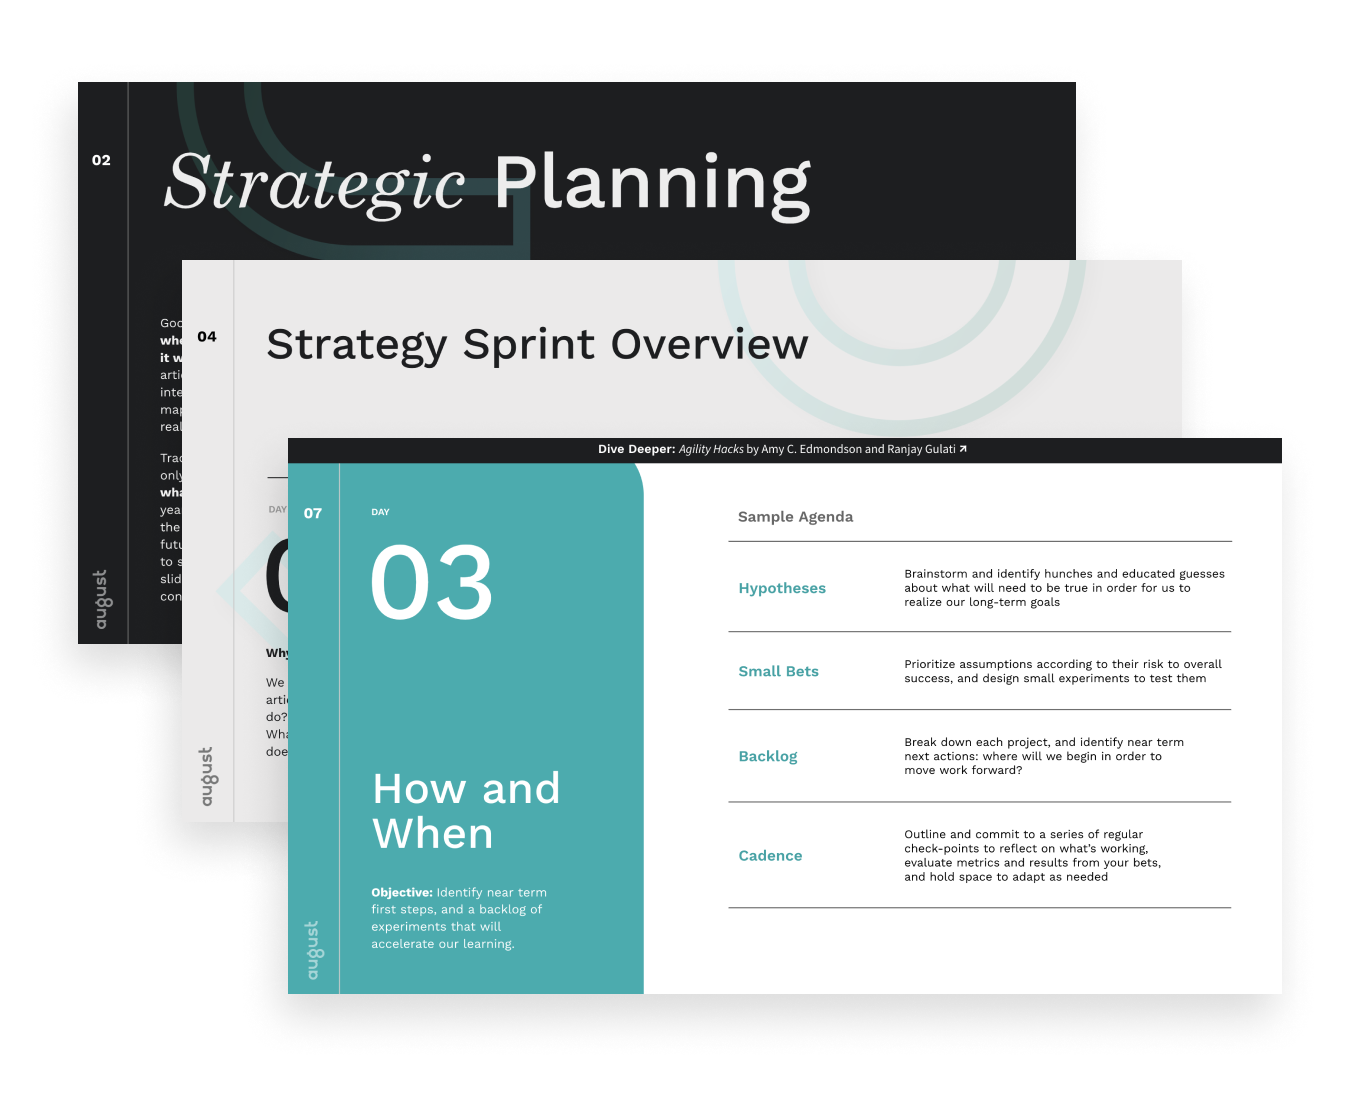 Strategy Sprint Playbook